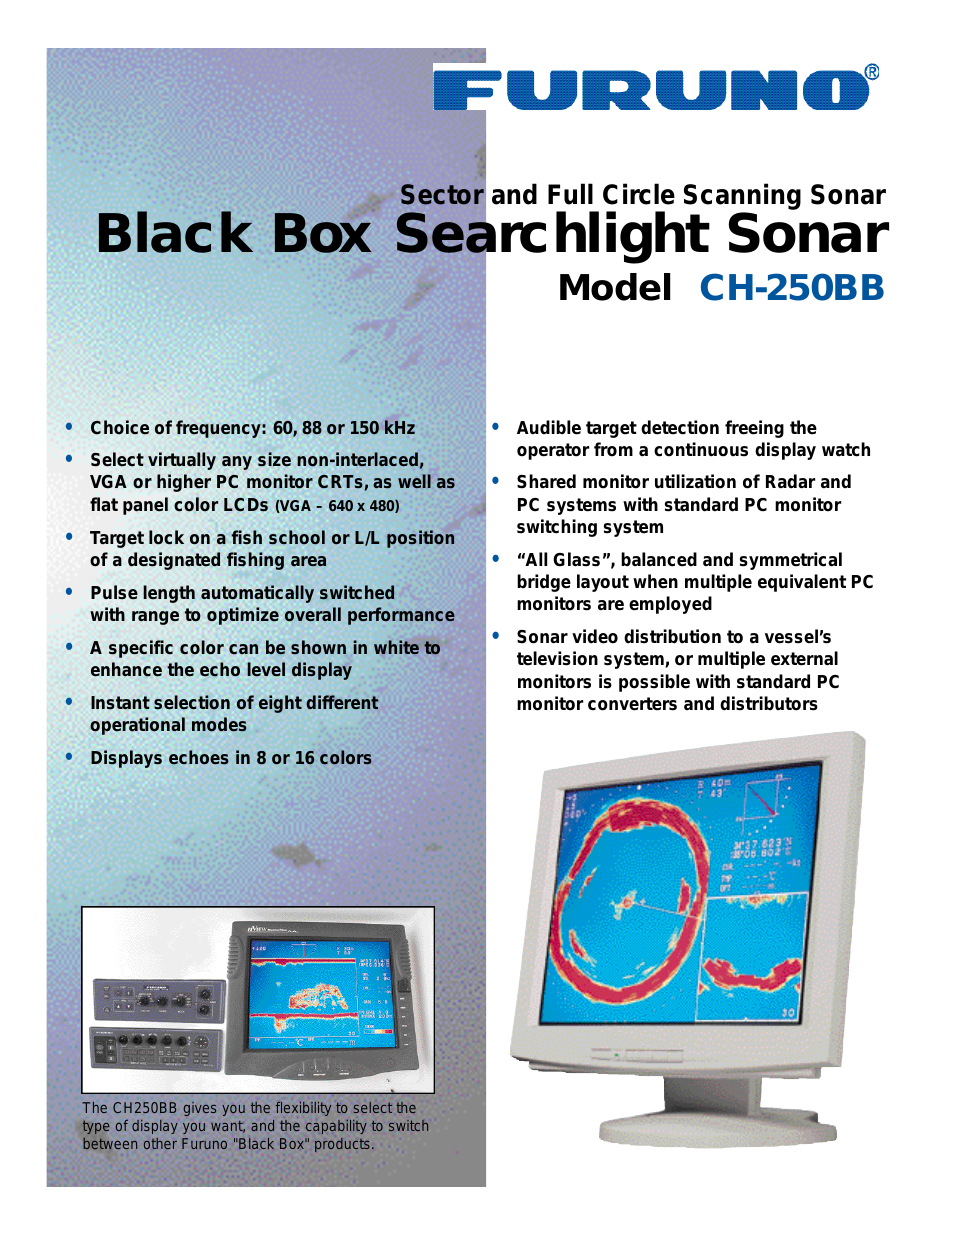 Black Box Searchlight Sonar CH-250BB